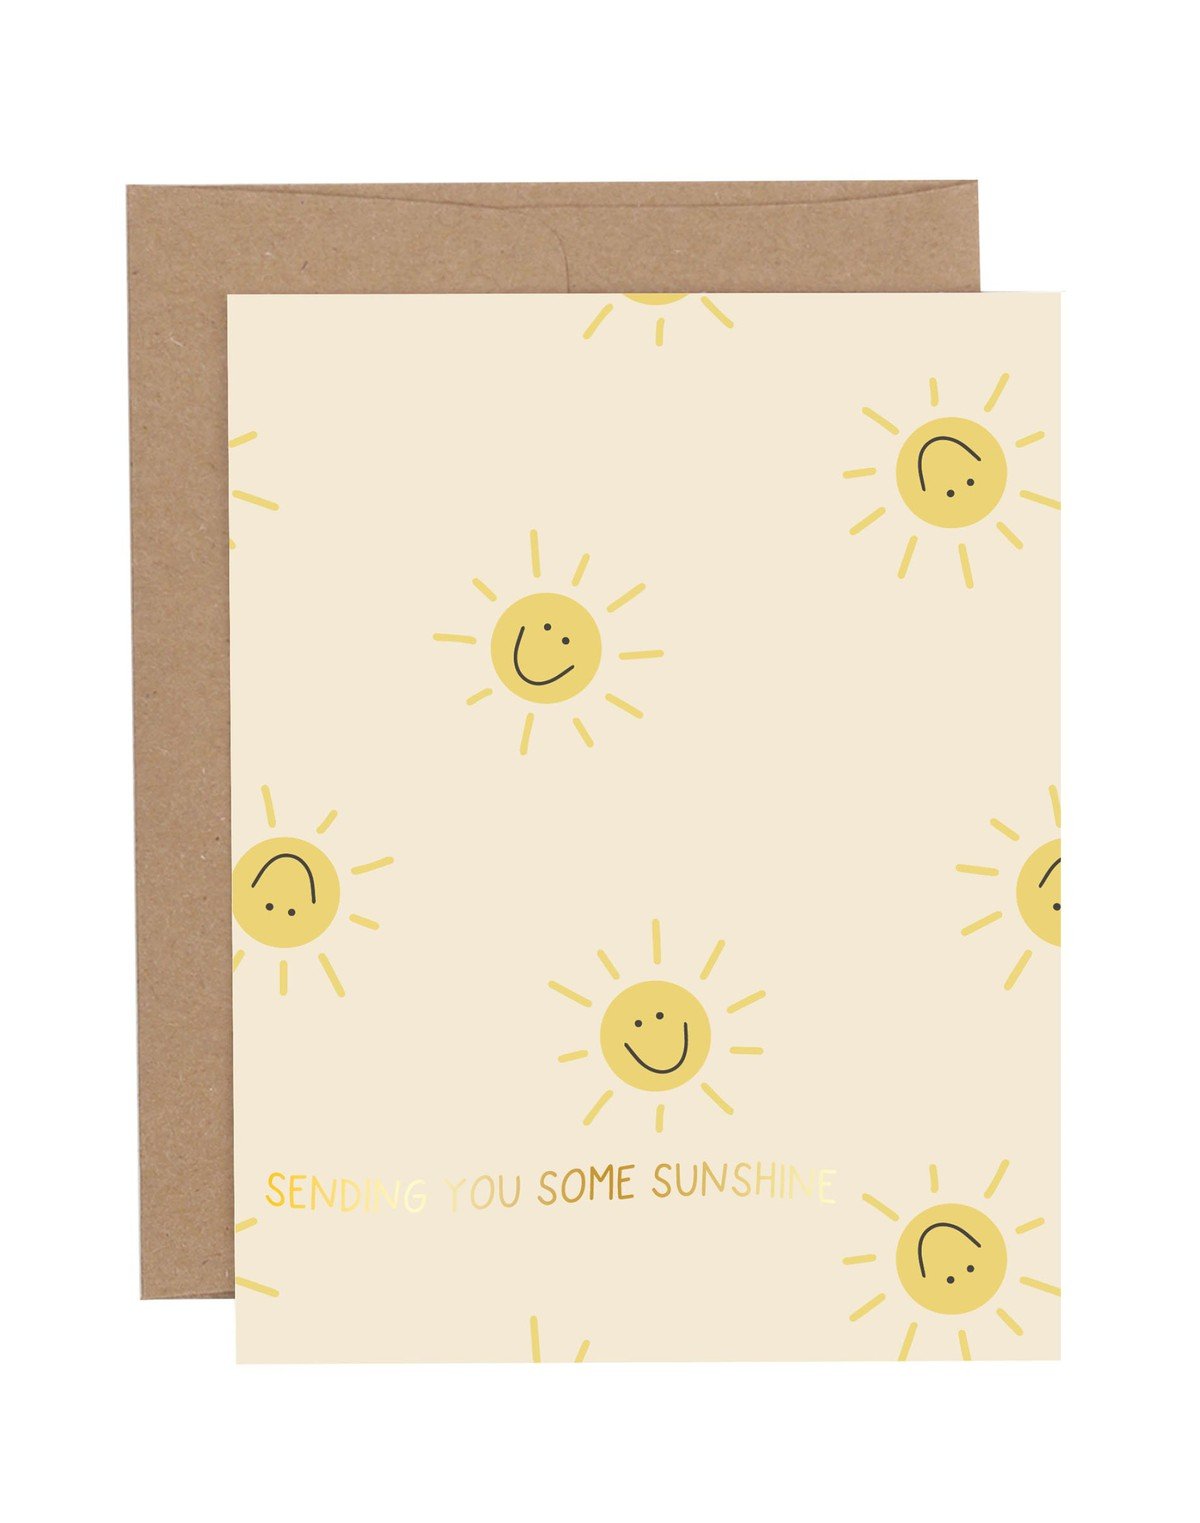 Sending Sunshine Greeting Card item